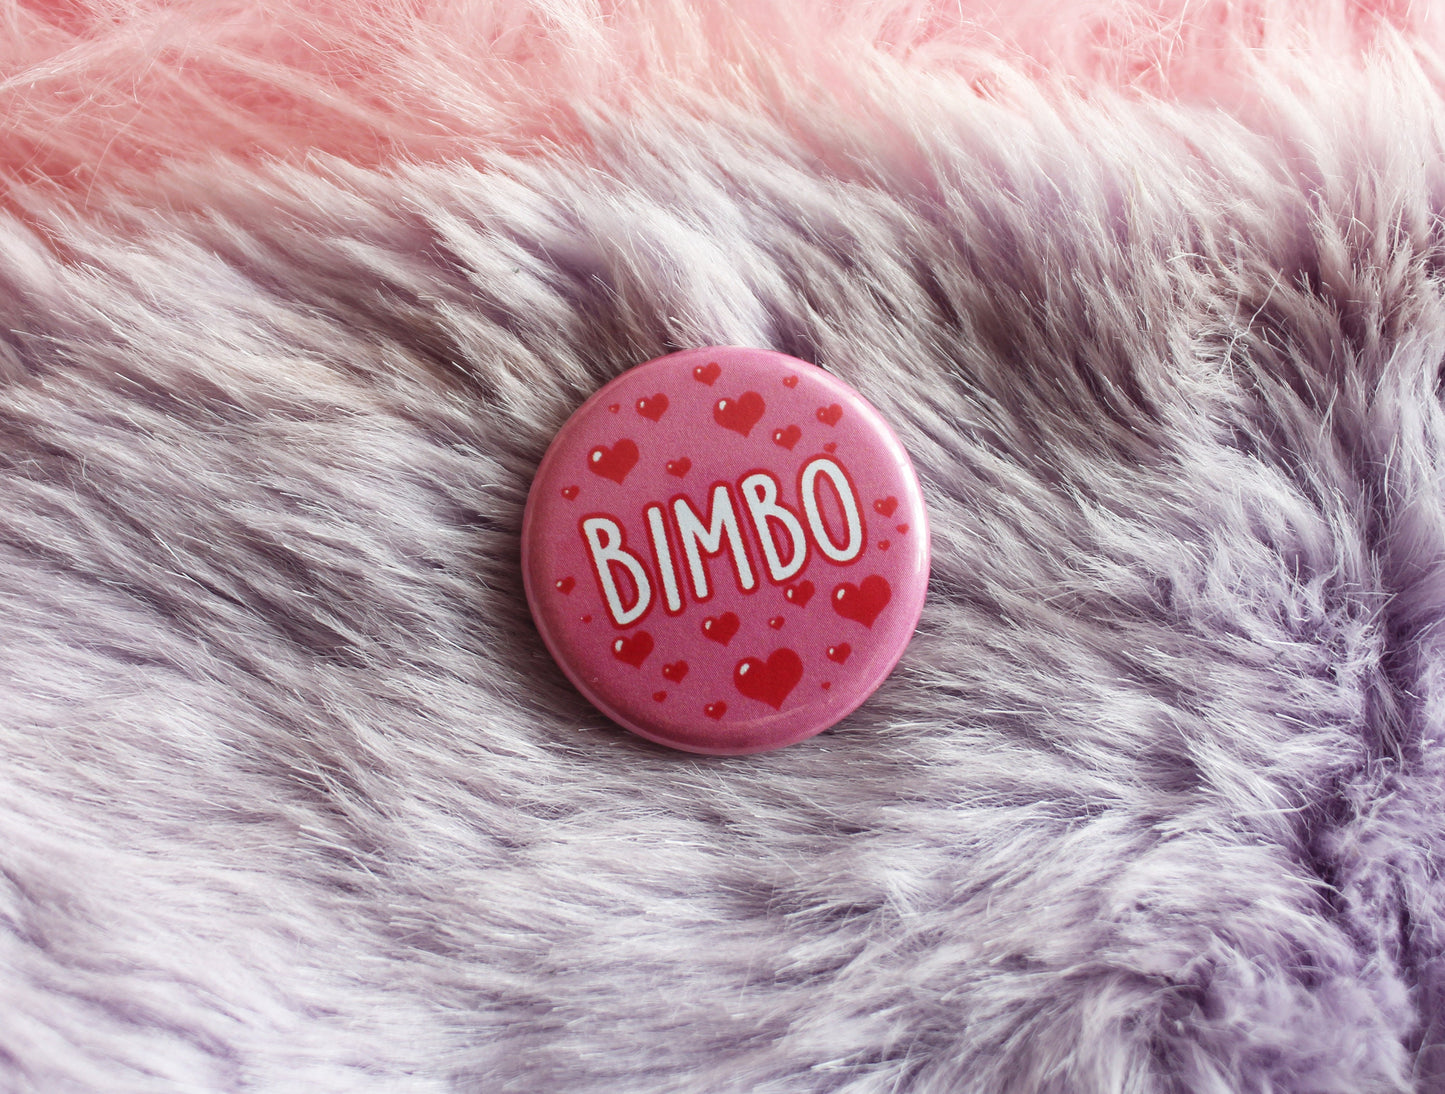 Bimbo, Bimboy, Himbo & Thembo Badges (38mm)